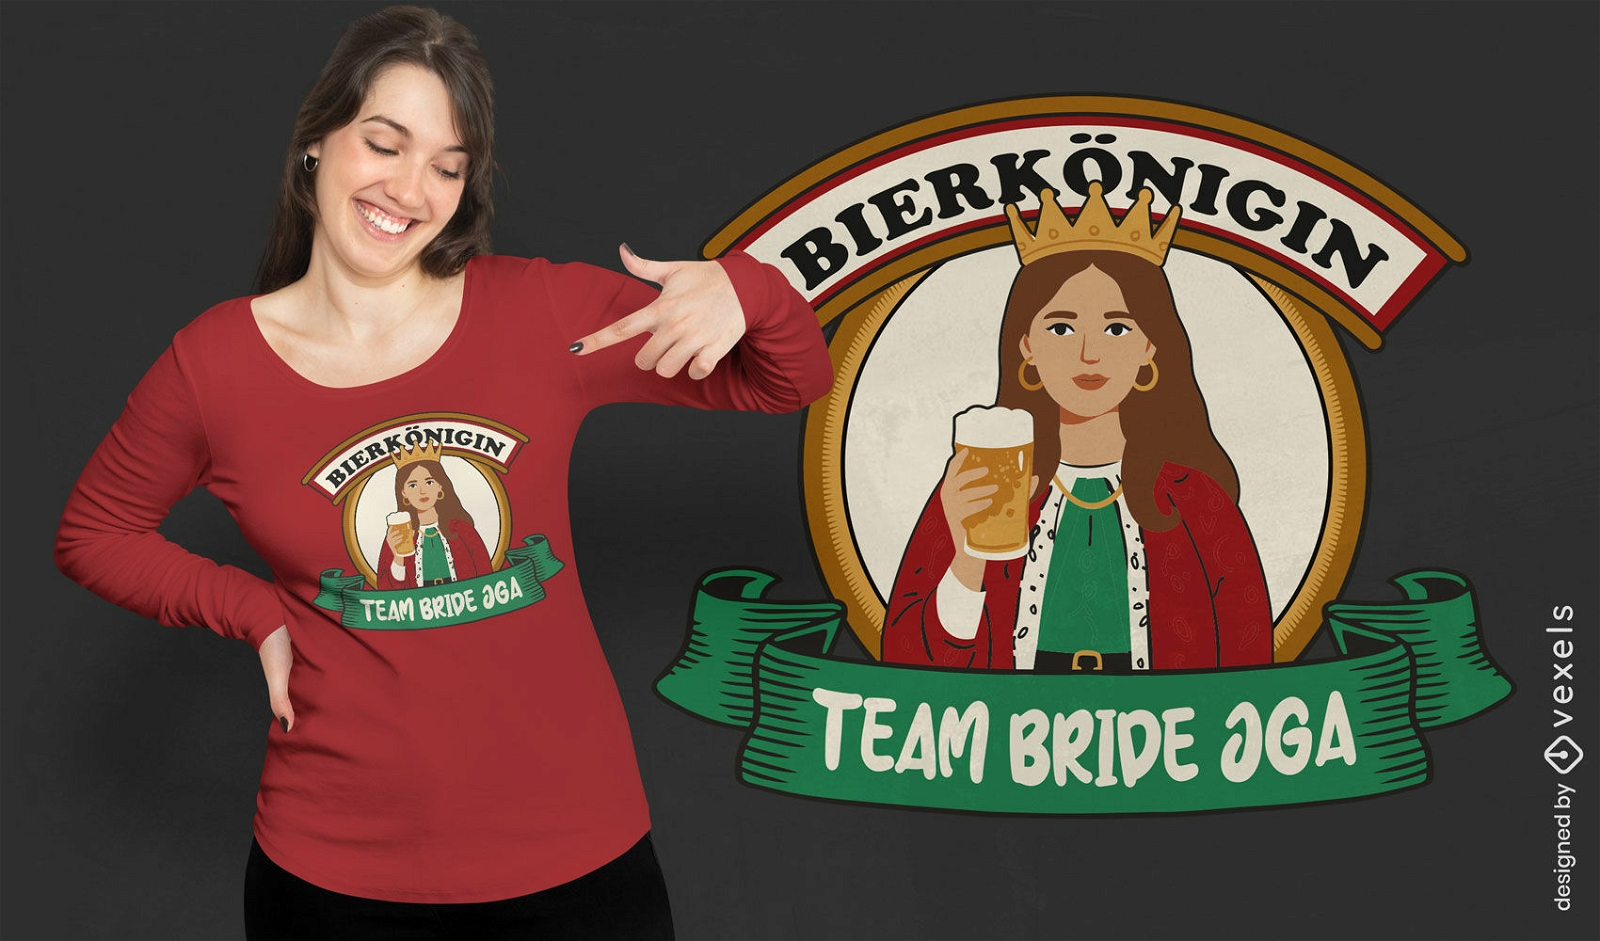 Team bride 2016 t-shirt design